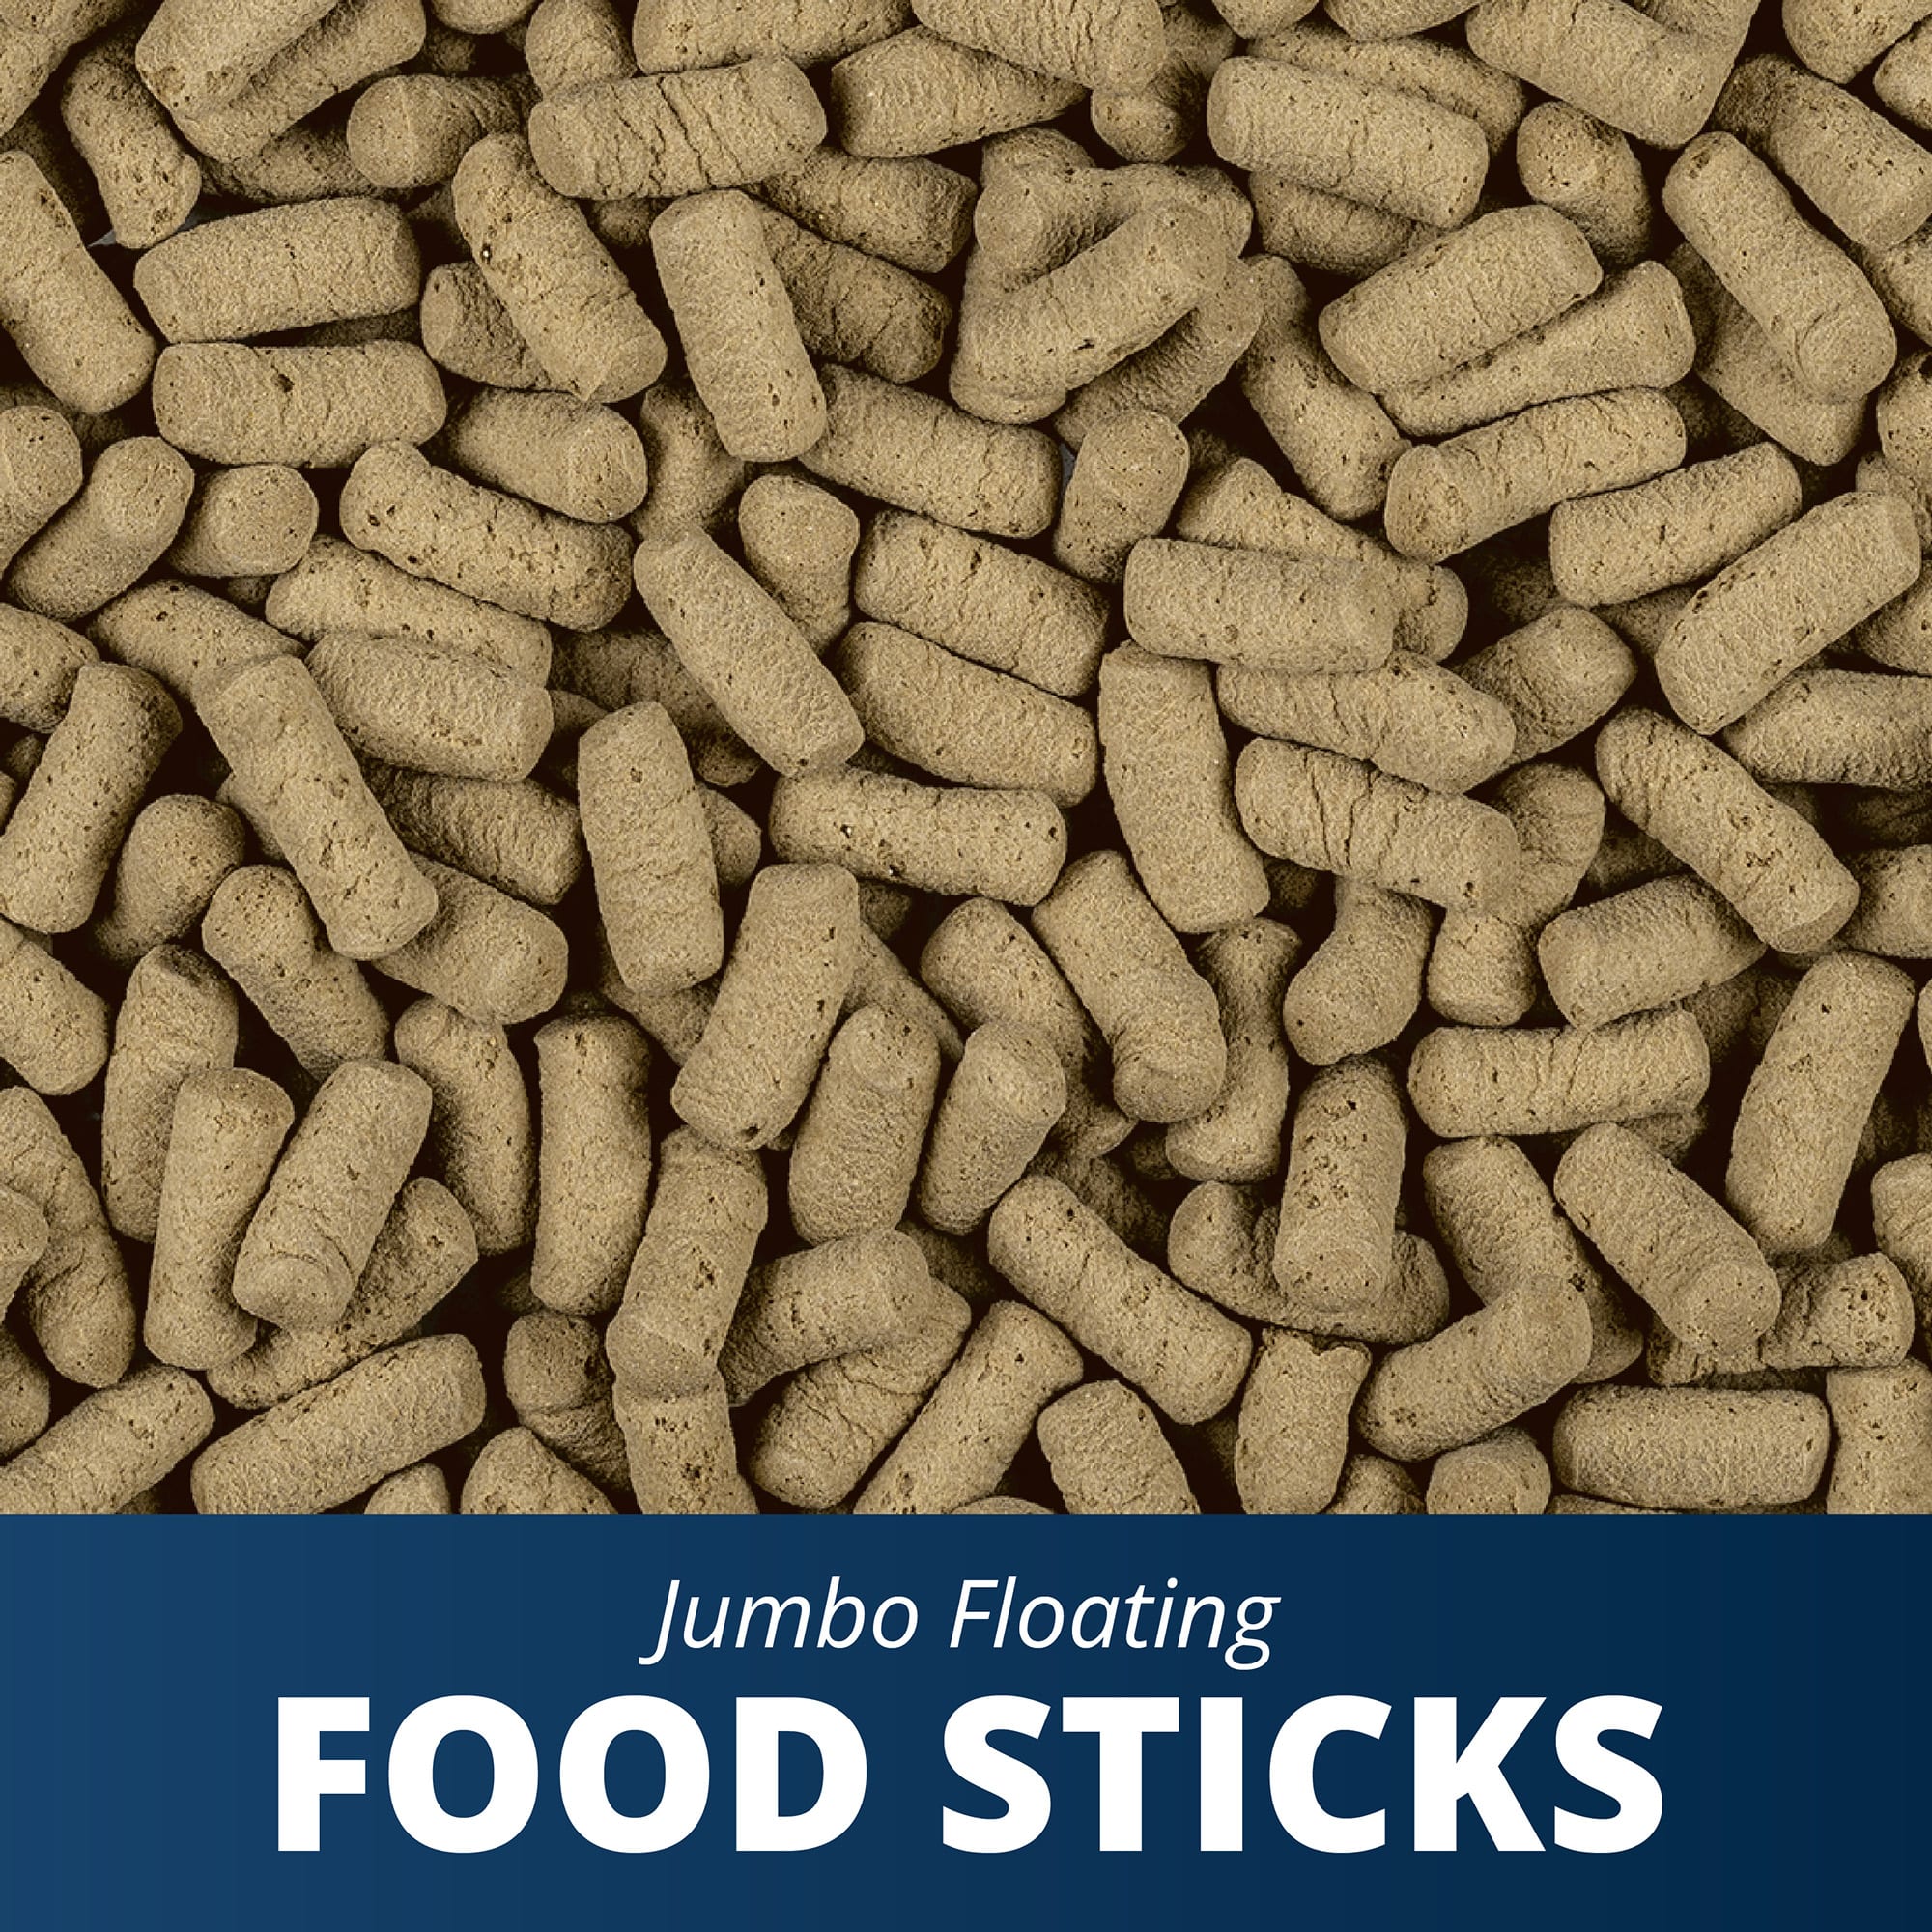 Tetra ReptoMin floating food sticks reviews in Pet Food - ChickAdvisor